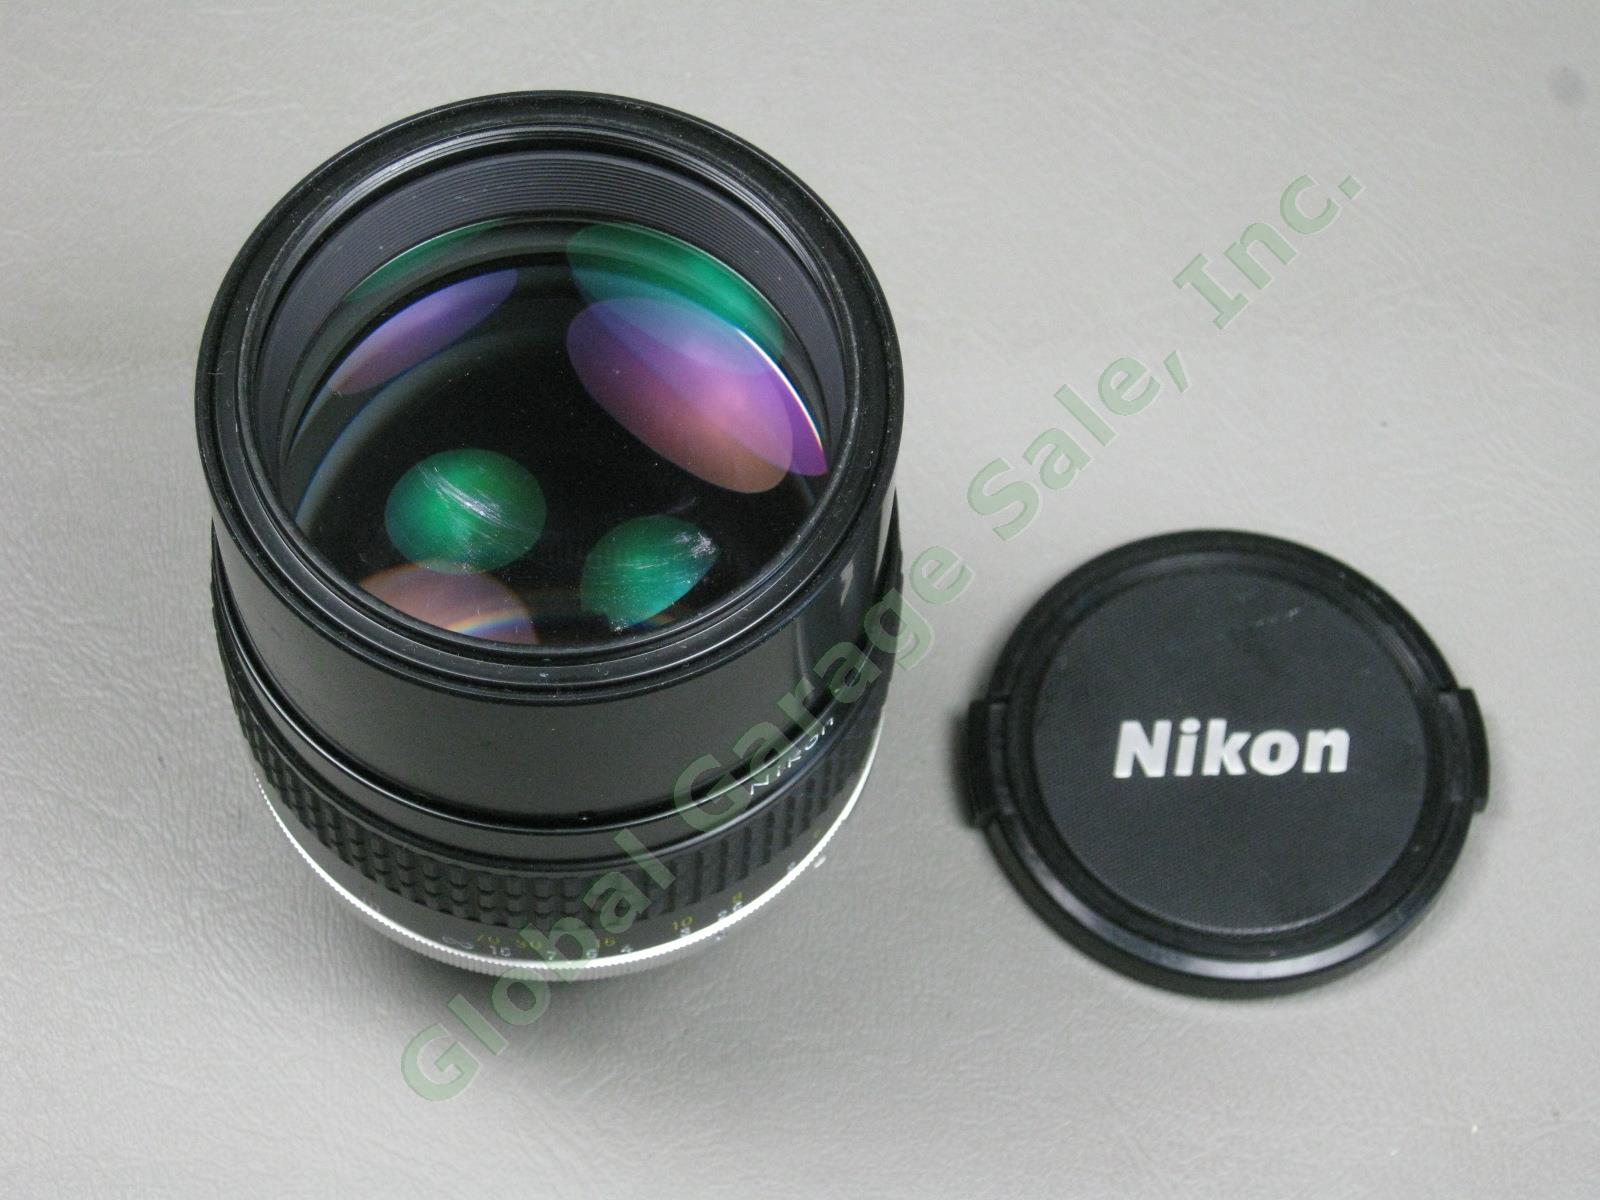 Nikon Nikkor 105mm 1:1.8 f/1.8 Telephoto Camera Lens #212615 Nice! No Reserve! 3